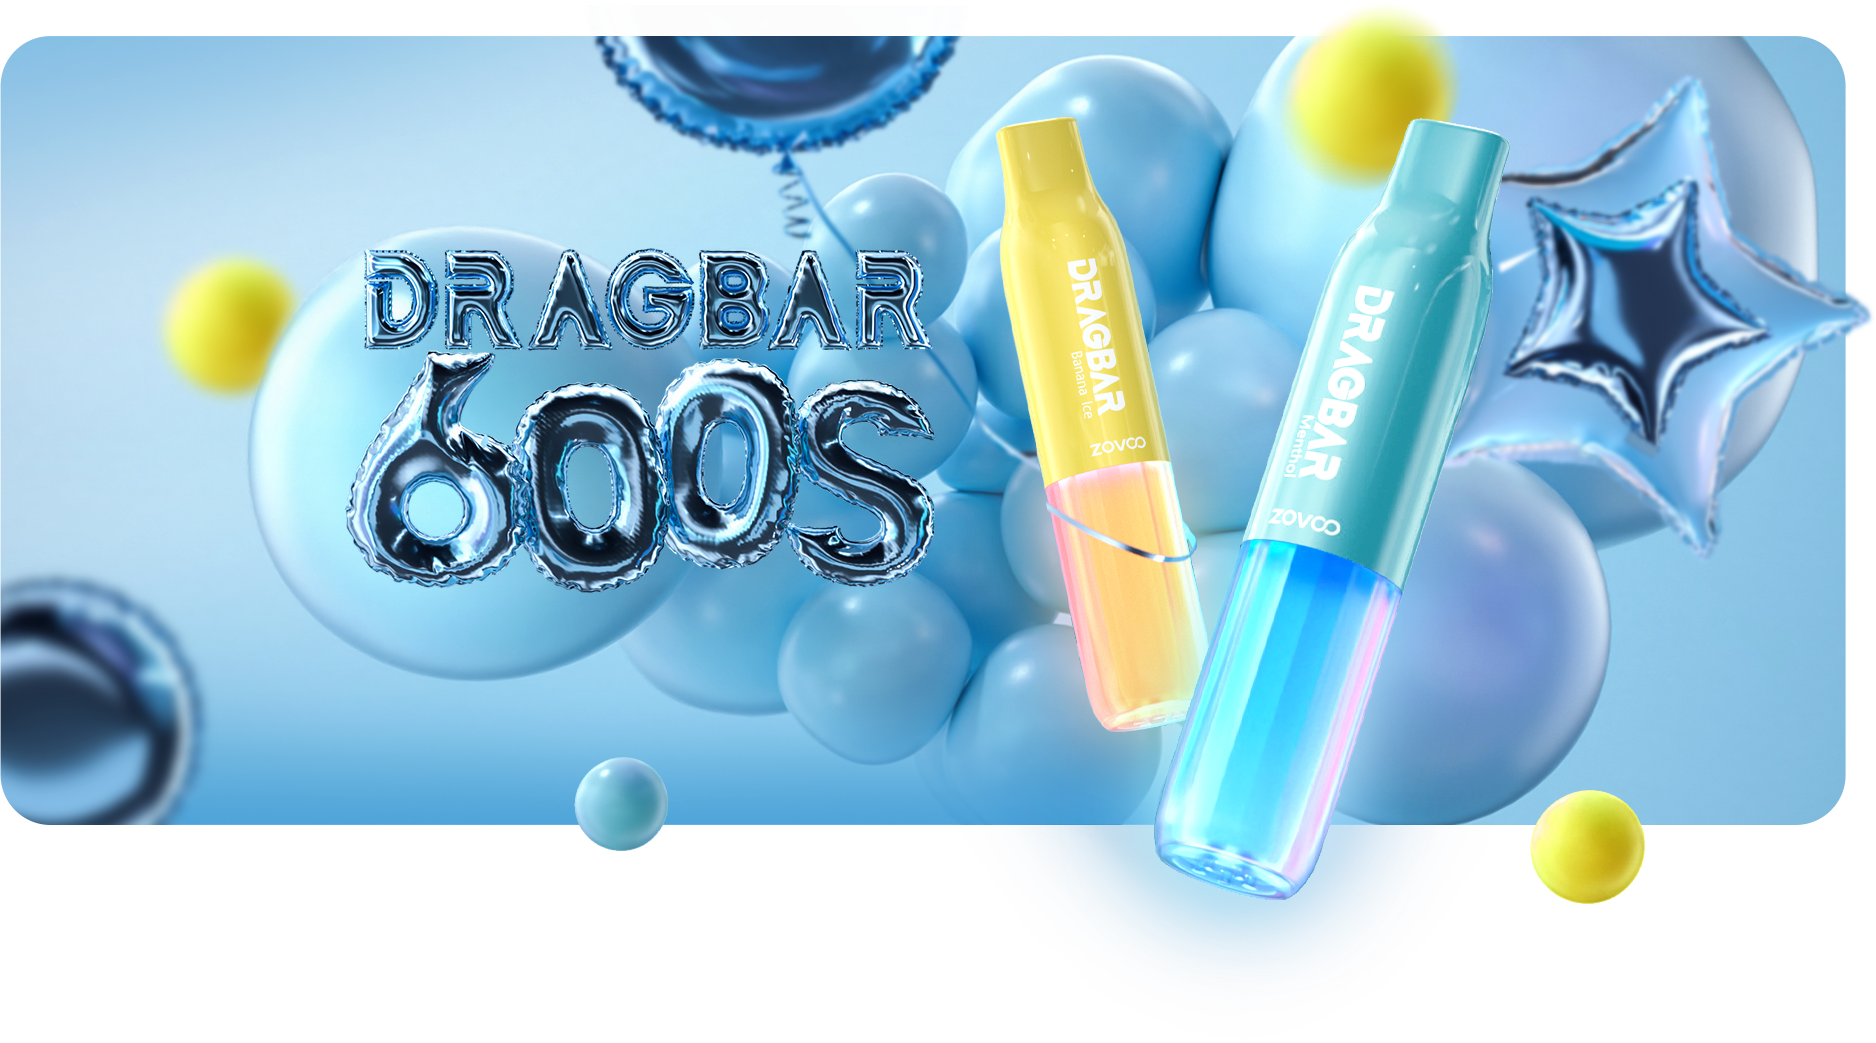 Dragbar 600S